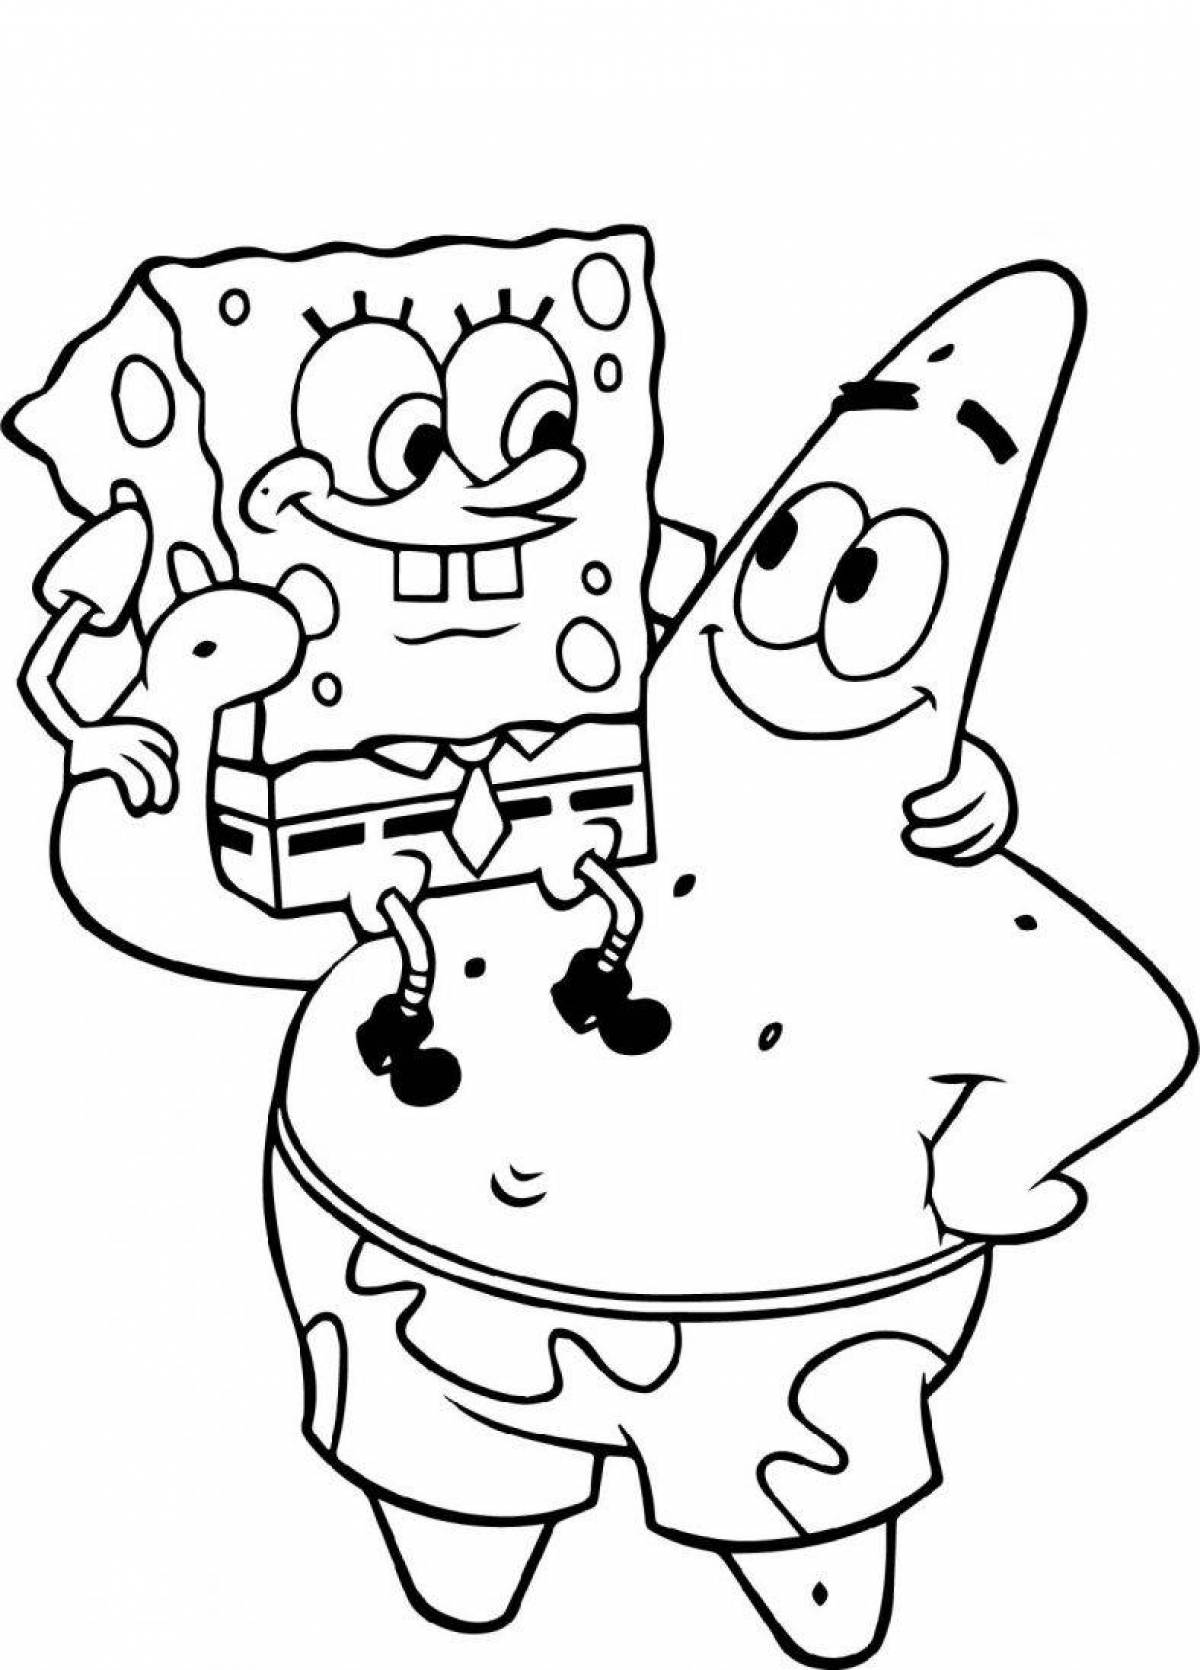 Happy spongebob and his friends